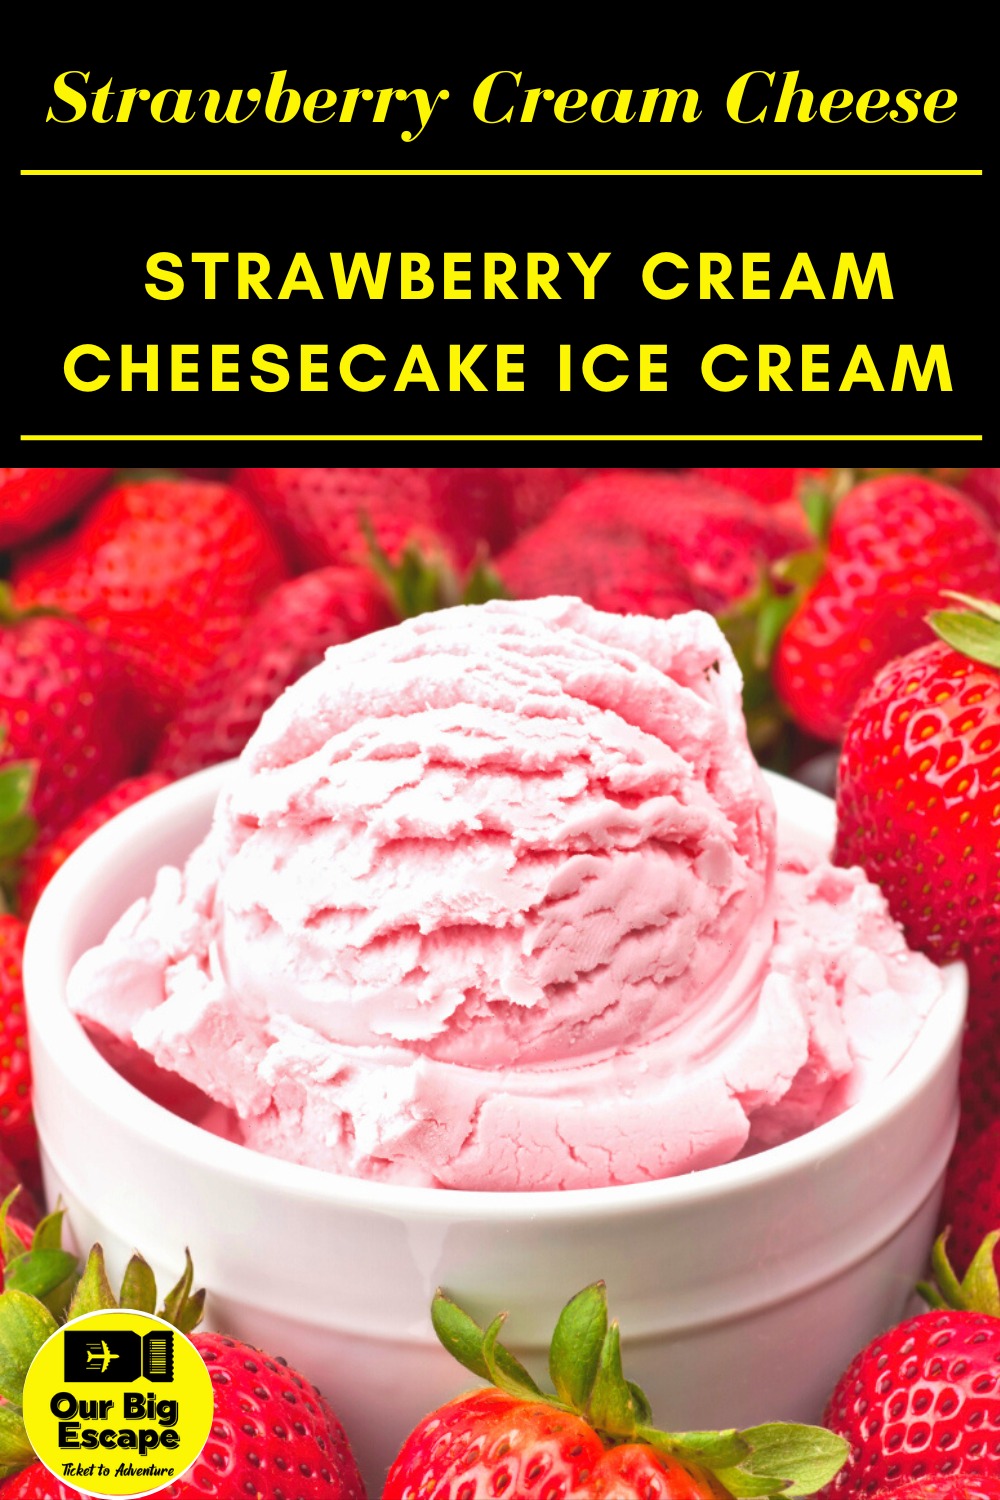 Strawberry Cream Cheese Dessert Recipes